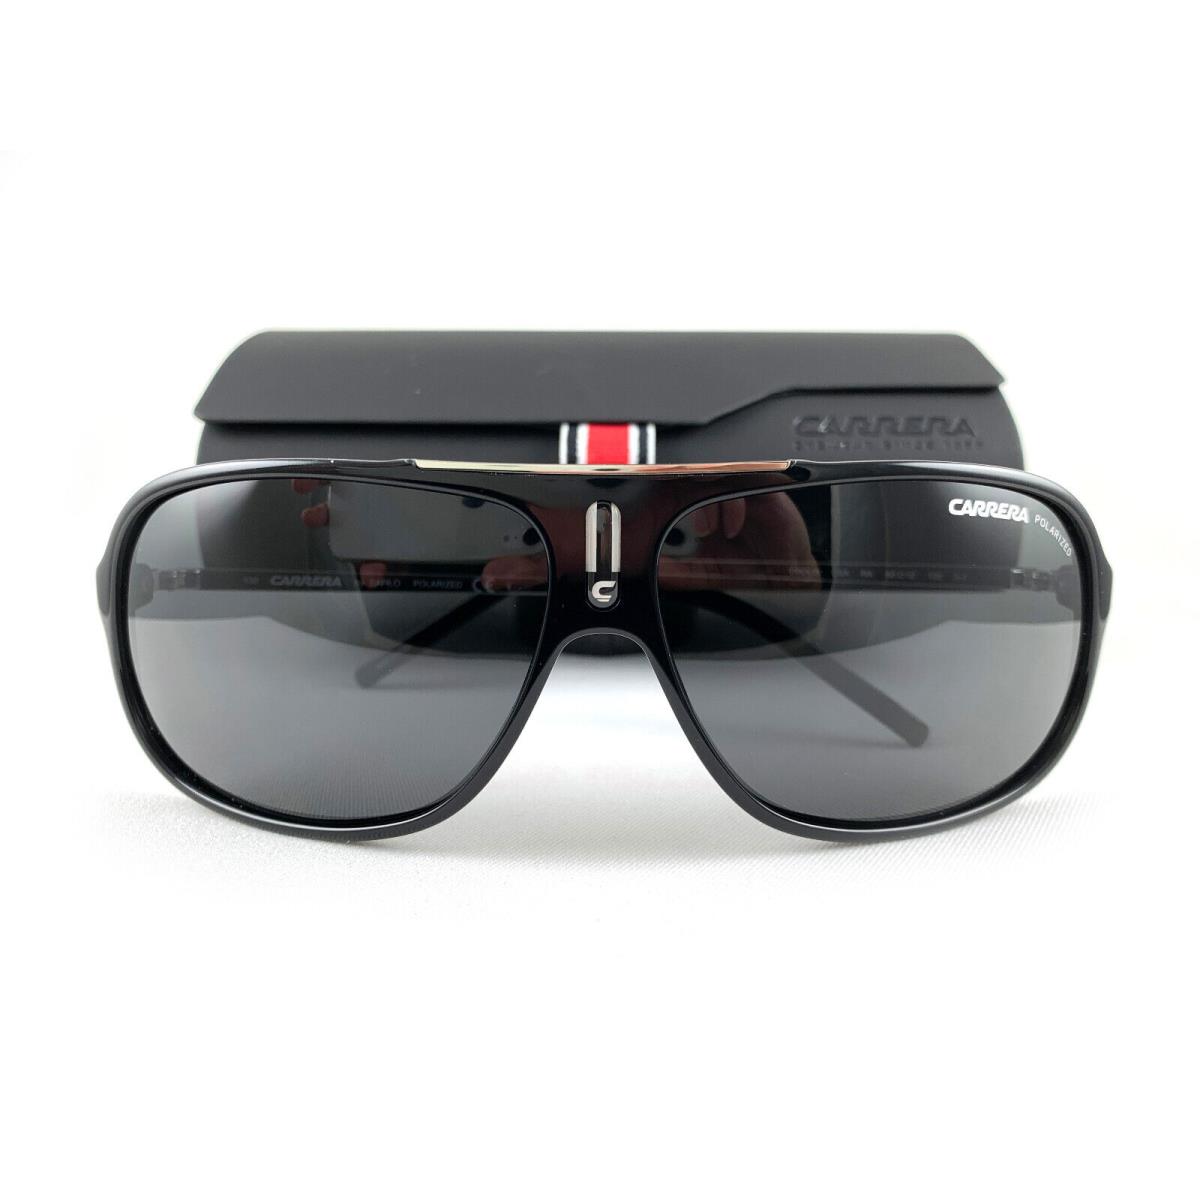 Carrera Sunglasses Cool/s Black Palladium Gray Polarized Csara - Frame: Black, Lens: Gray